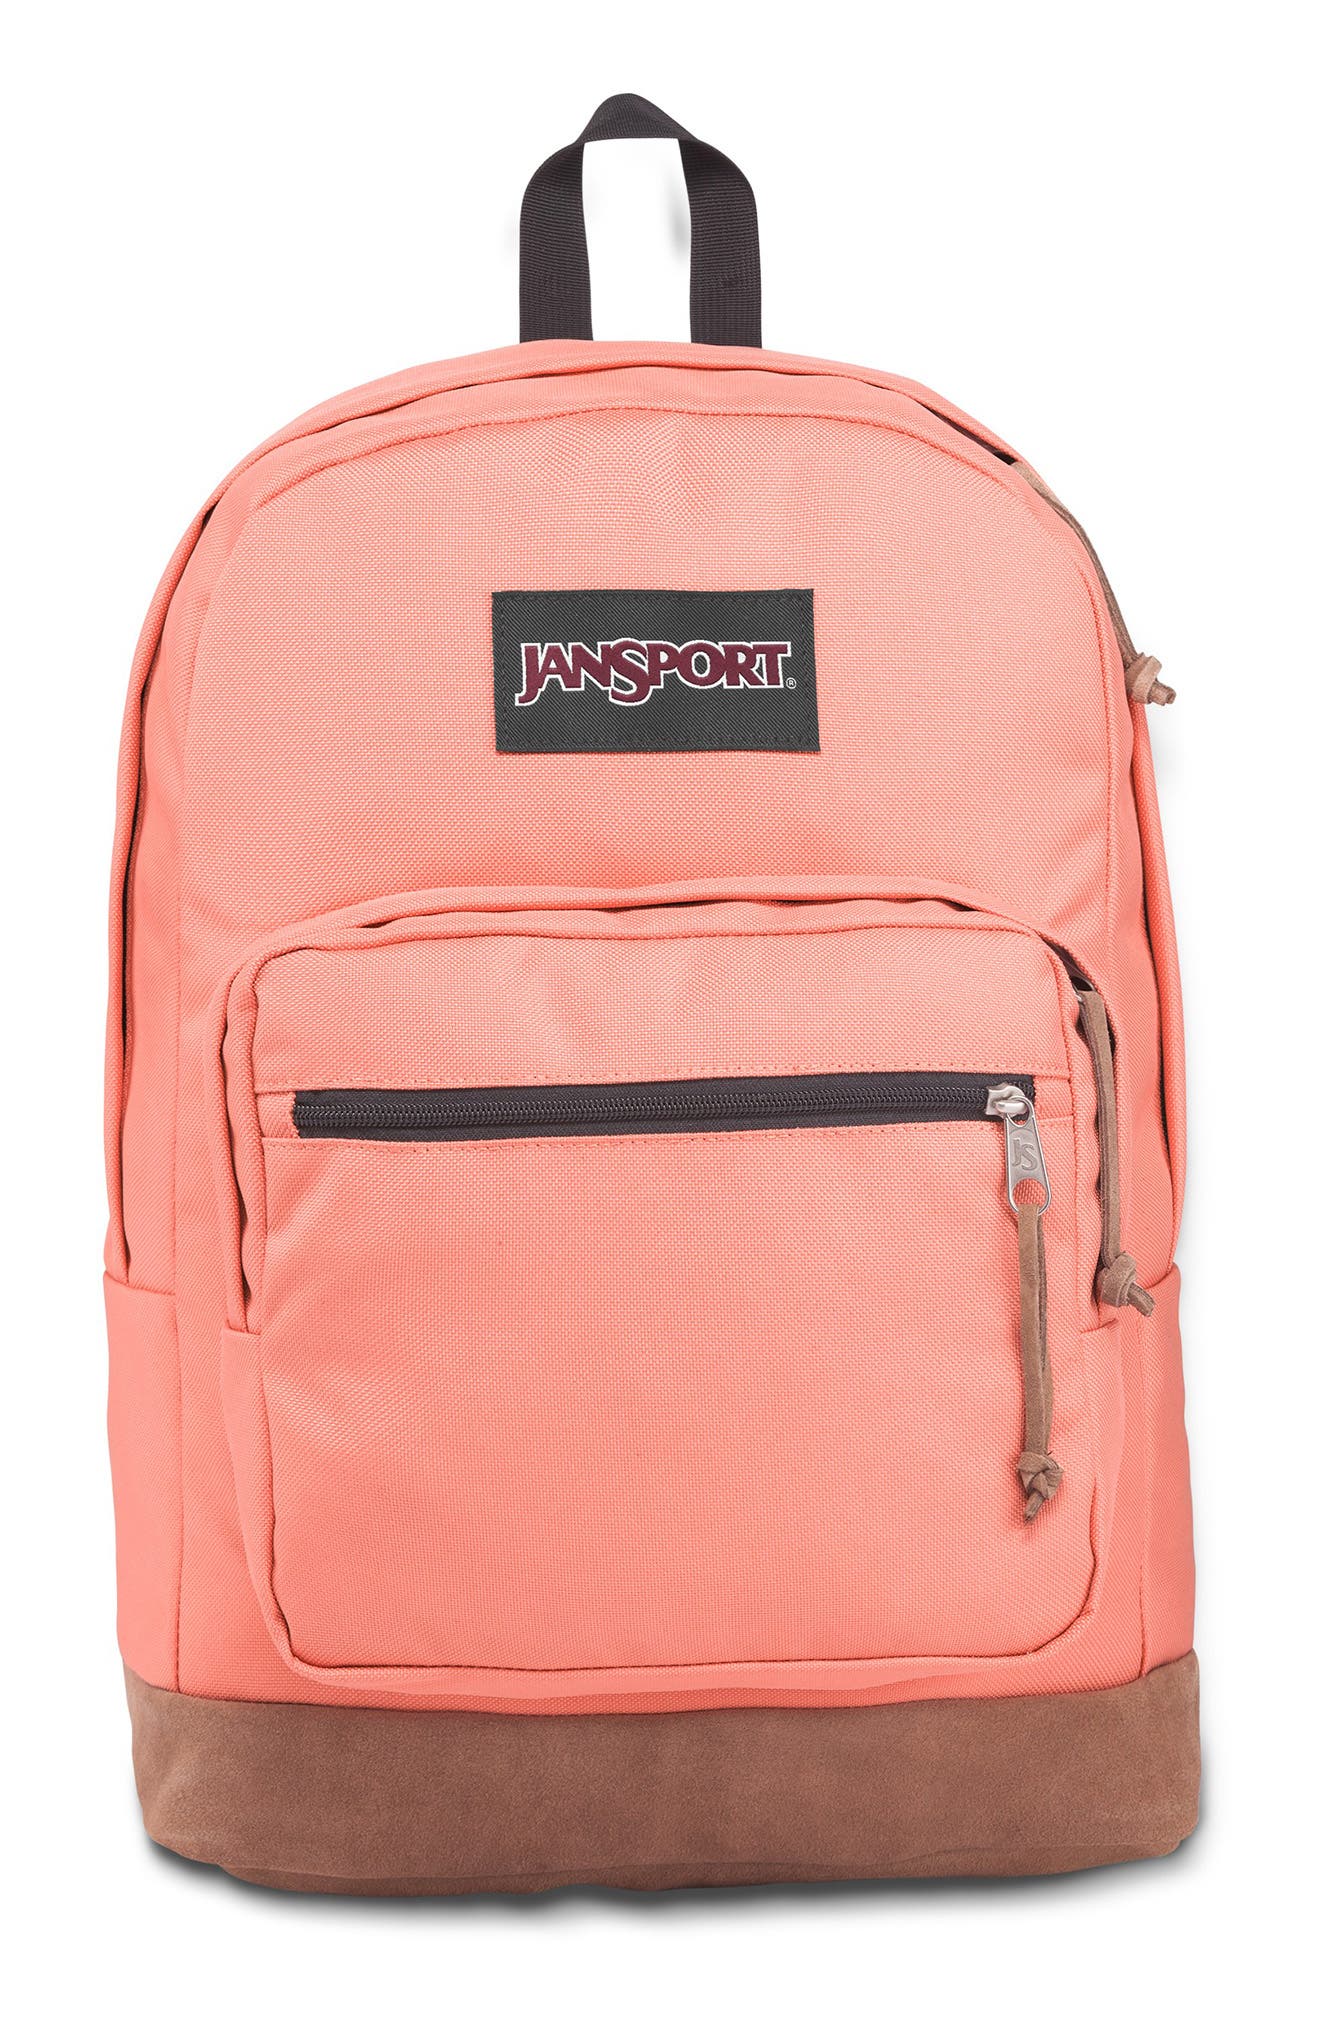 Jansport Right Pack Backpack In Crabapple